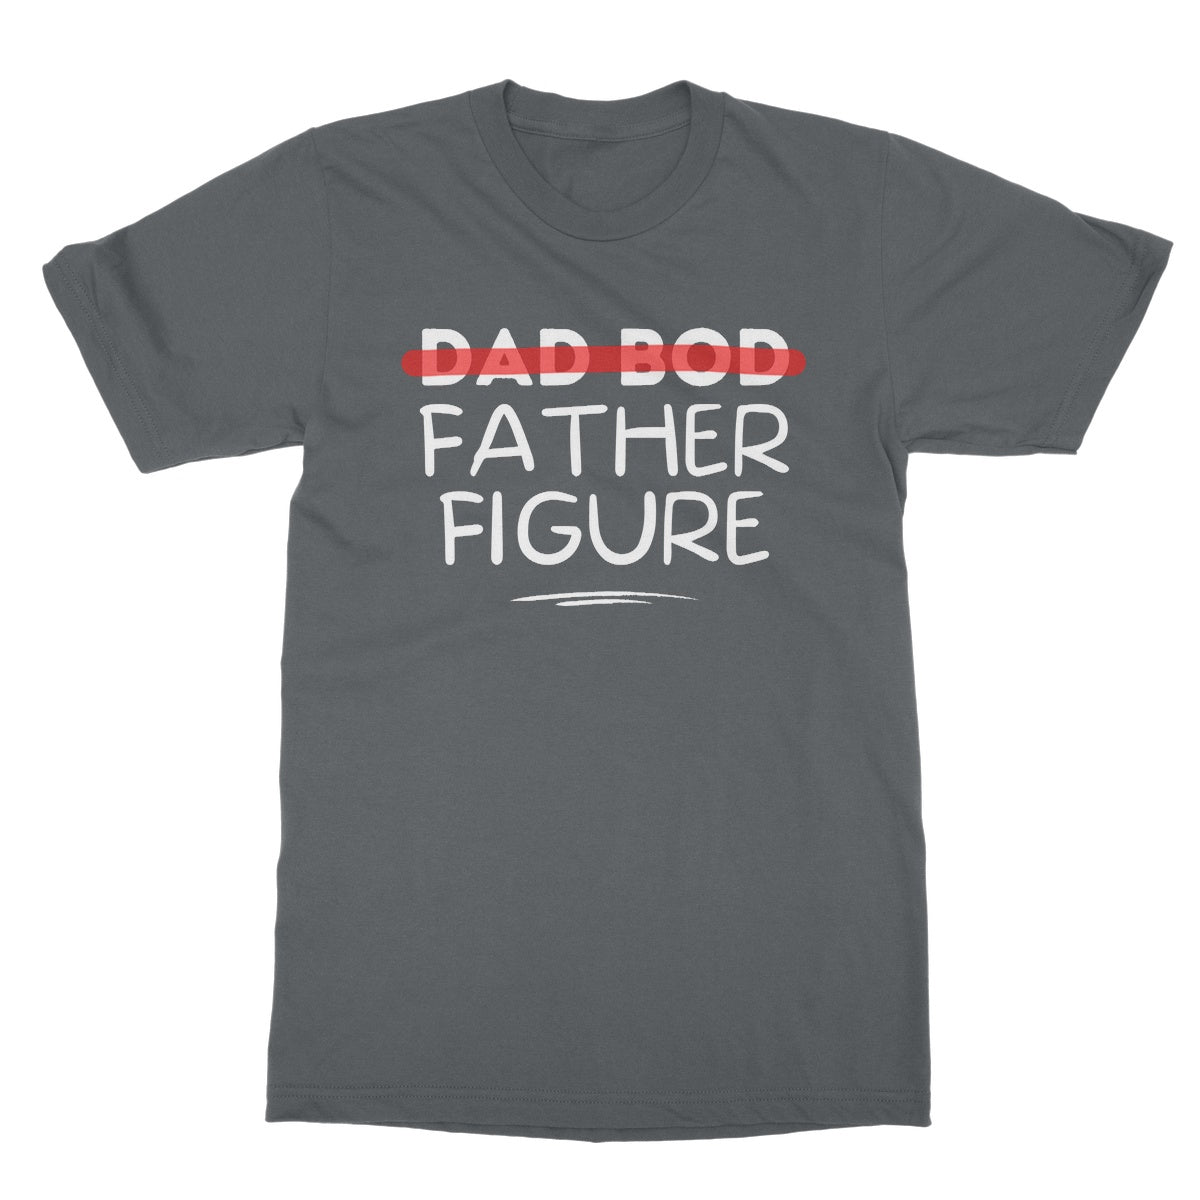 dad bod father figure t shirt grey